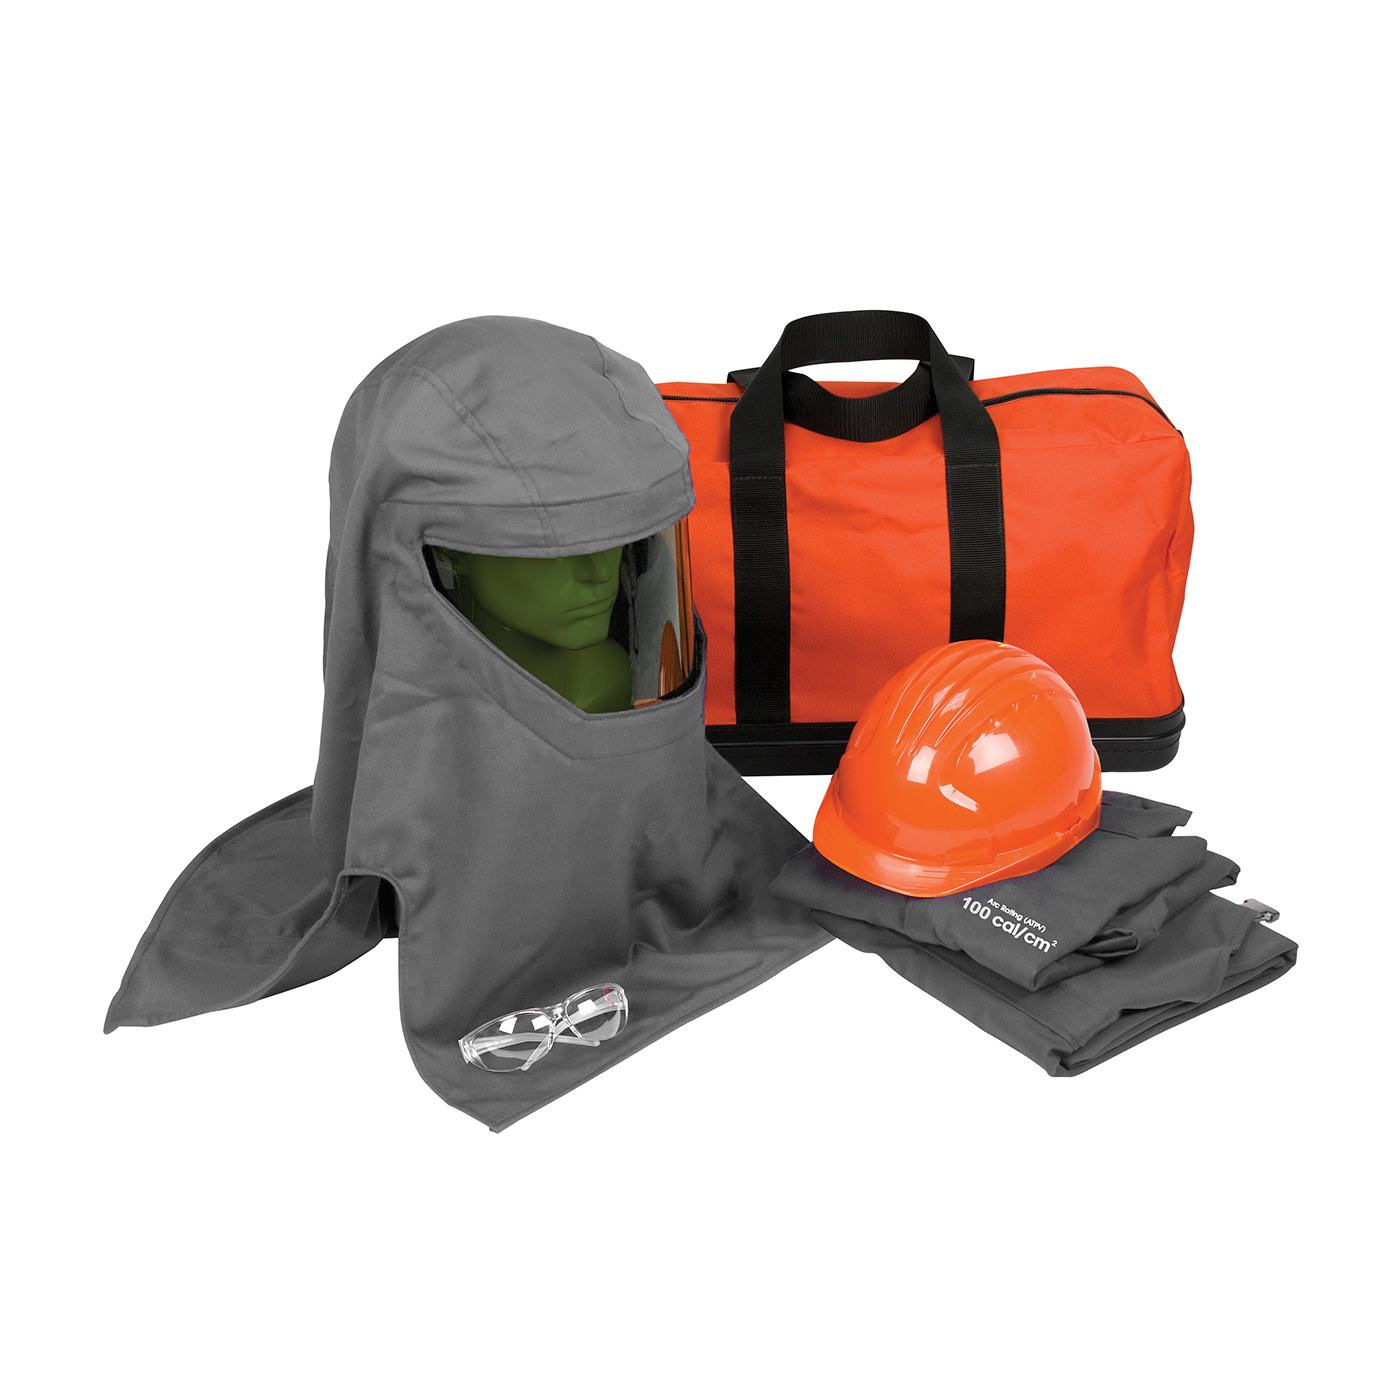 PIP® 9150-52730/L Arc Flash Kit, Hazard Risk Category (HRC): 4, Hood/Face Shield Max Arc Flash Protection: 100 cal/sq-cm, Garment Max Arc Flash Protection: 100 cal/sq-cm, NFPA 70E-2018, Arc Hood/Hard Hat Head/Face Protection, L